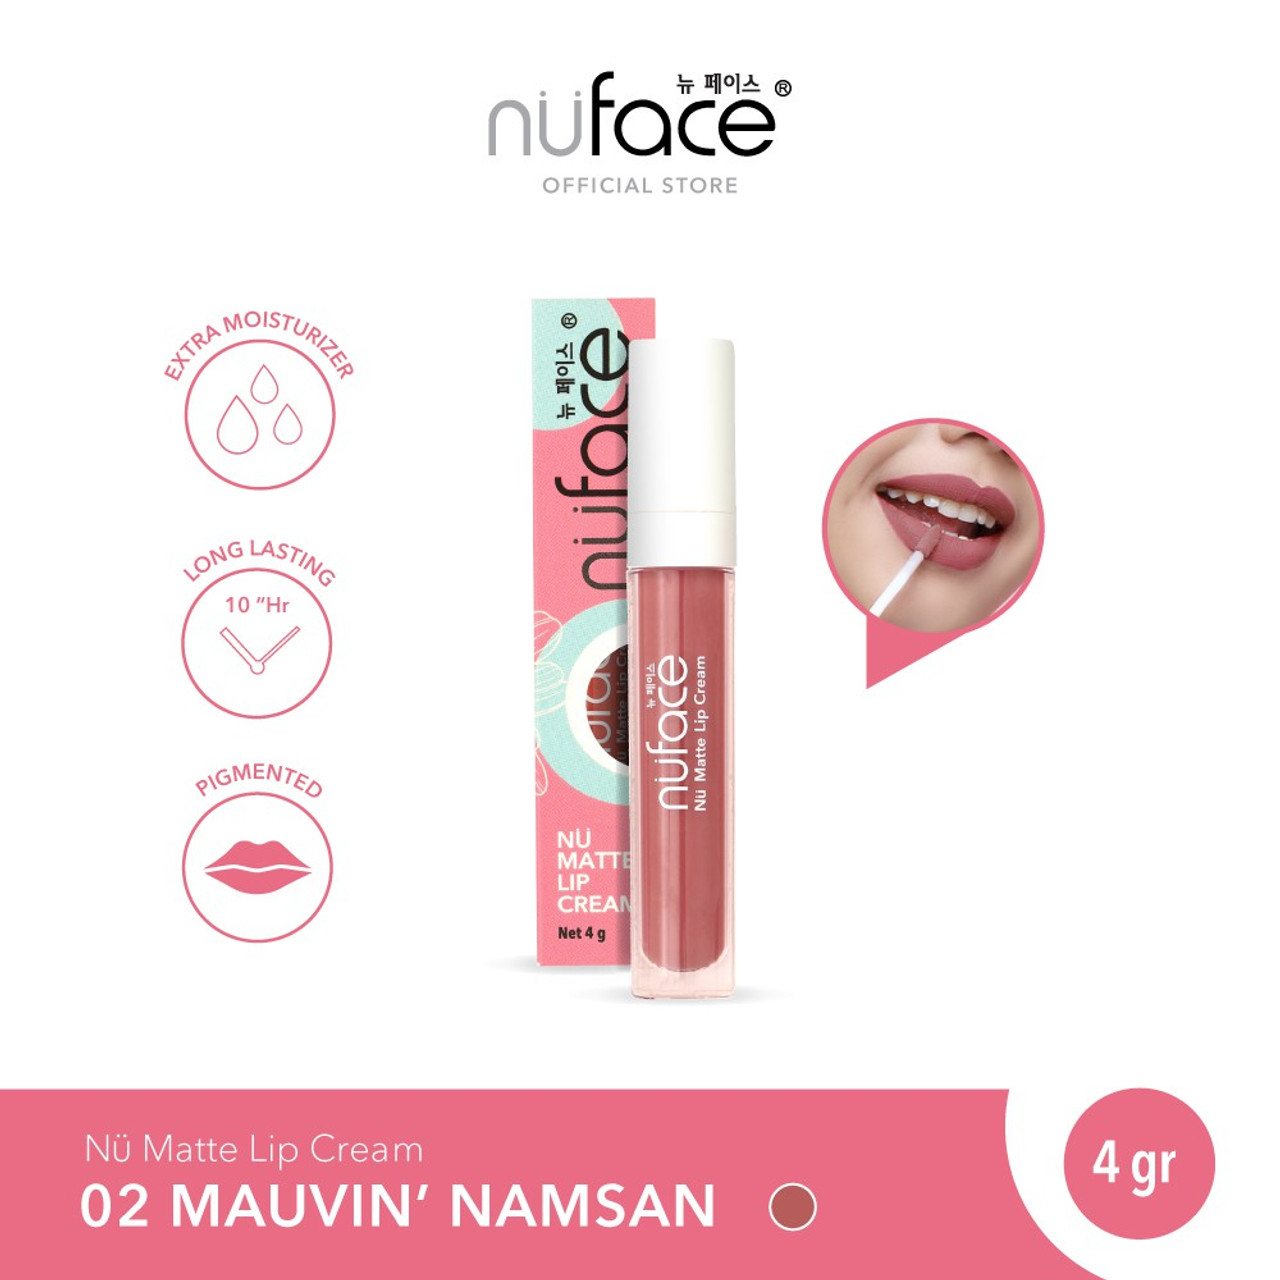 Nuface Nu Matte Lip Cream Mauvin' Namsan, 4gr